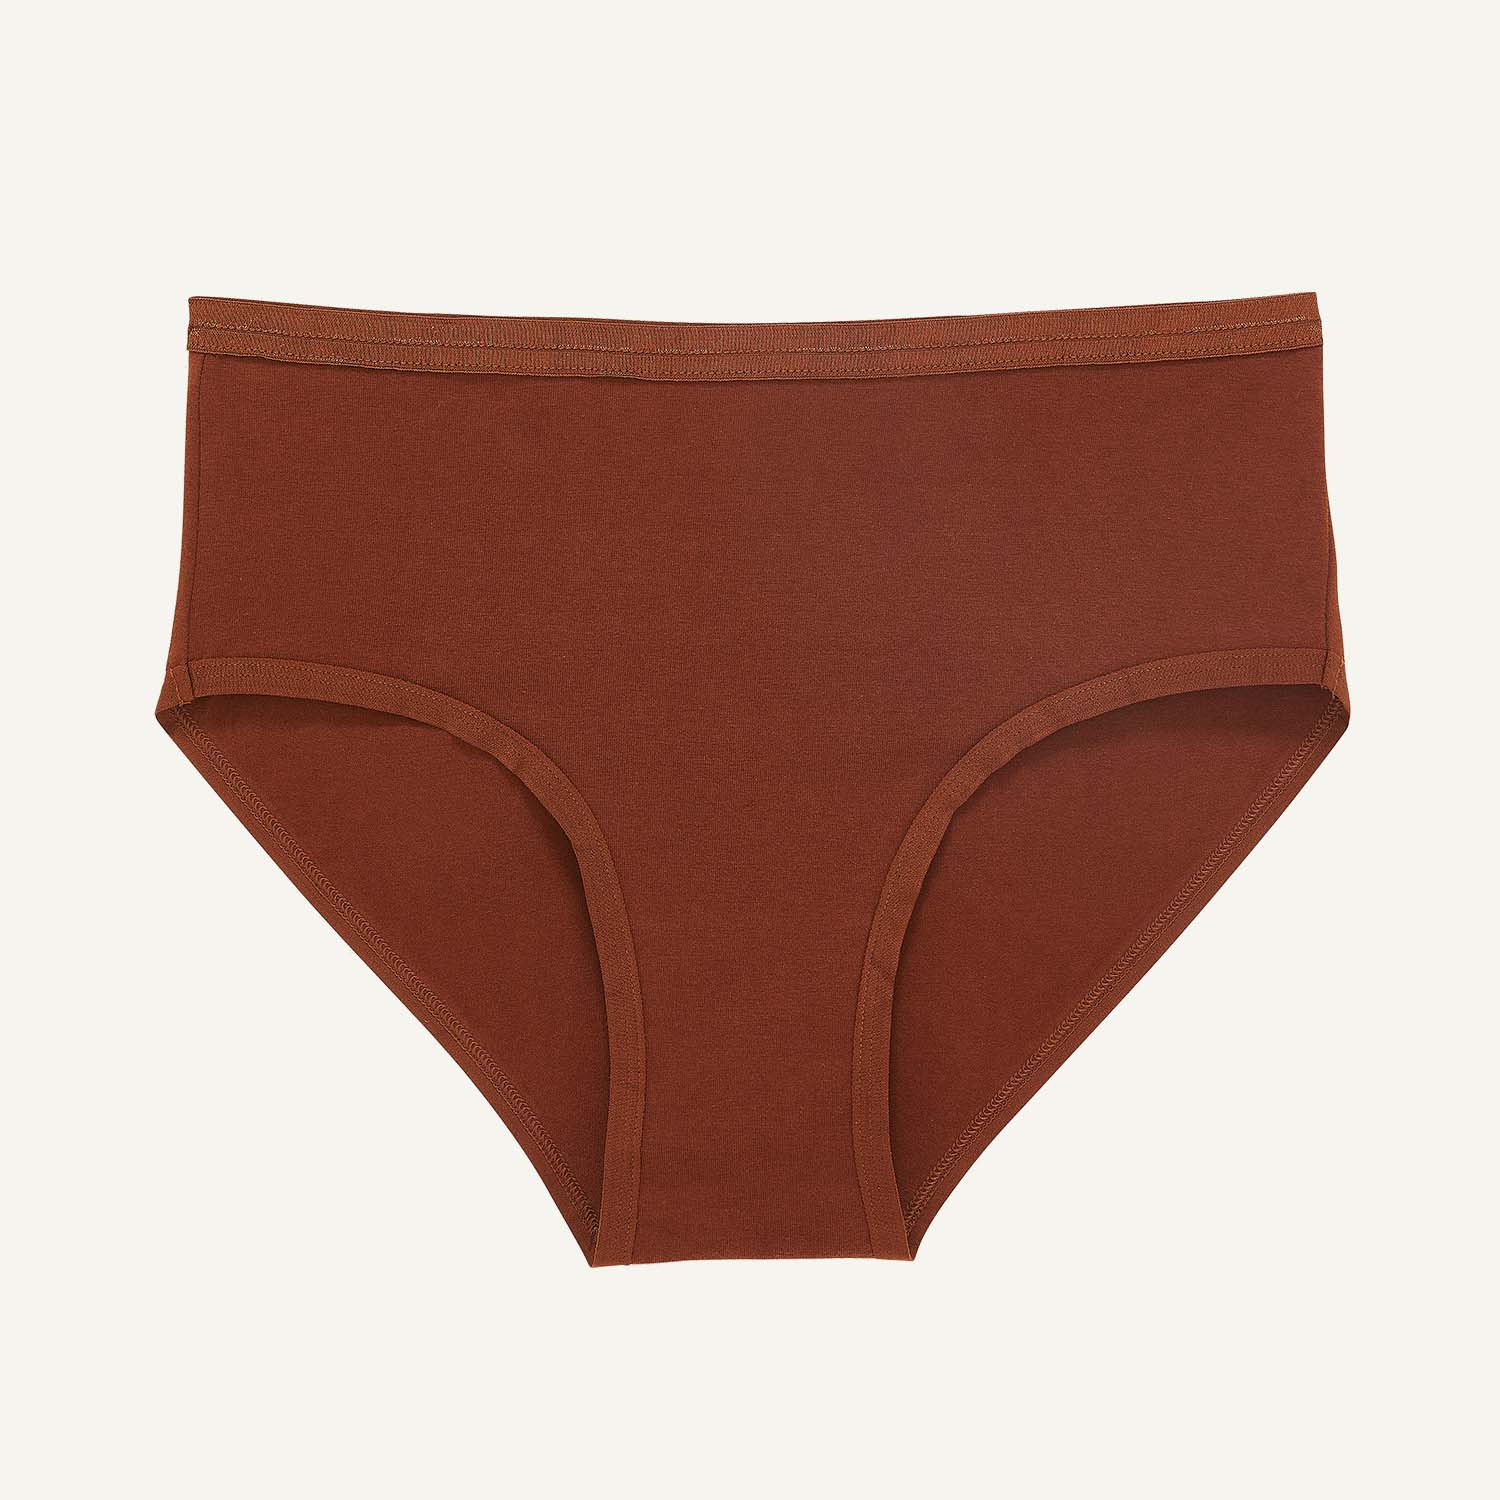 Organic cotton underwear nude color for dark brown women.